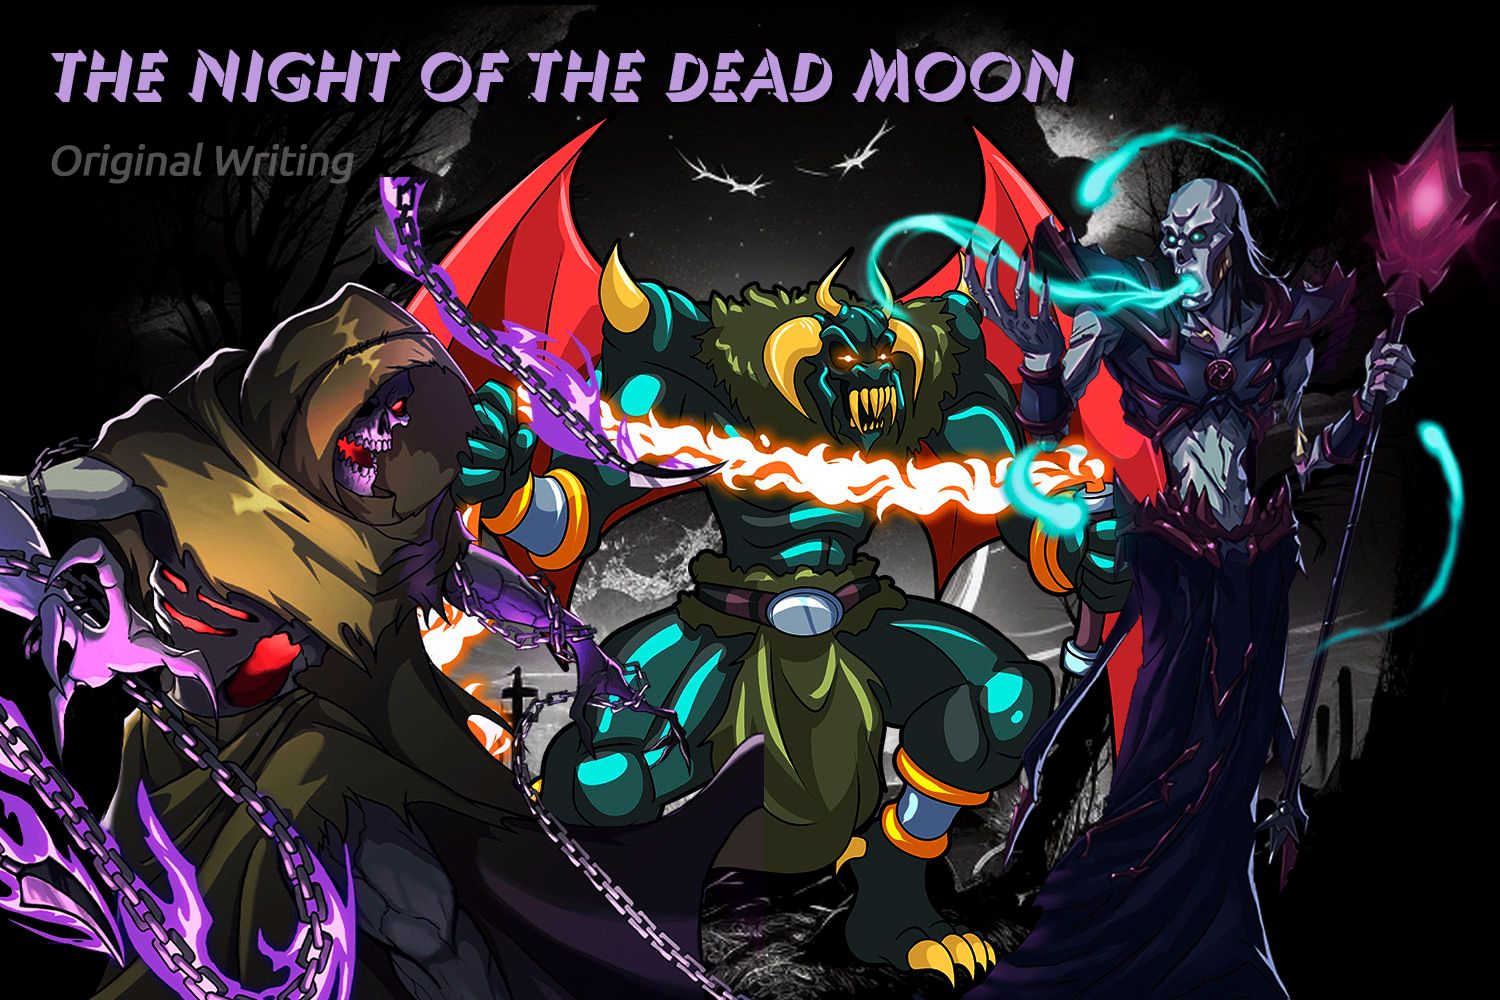 @cjlugo/the-night-of-the-dead-moon-original-writing-engesp